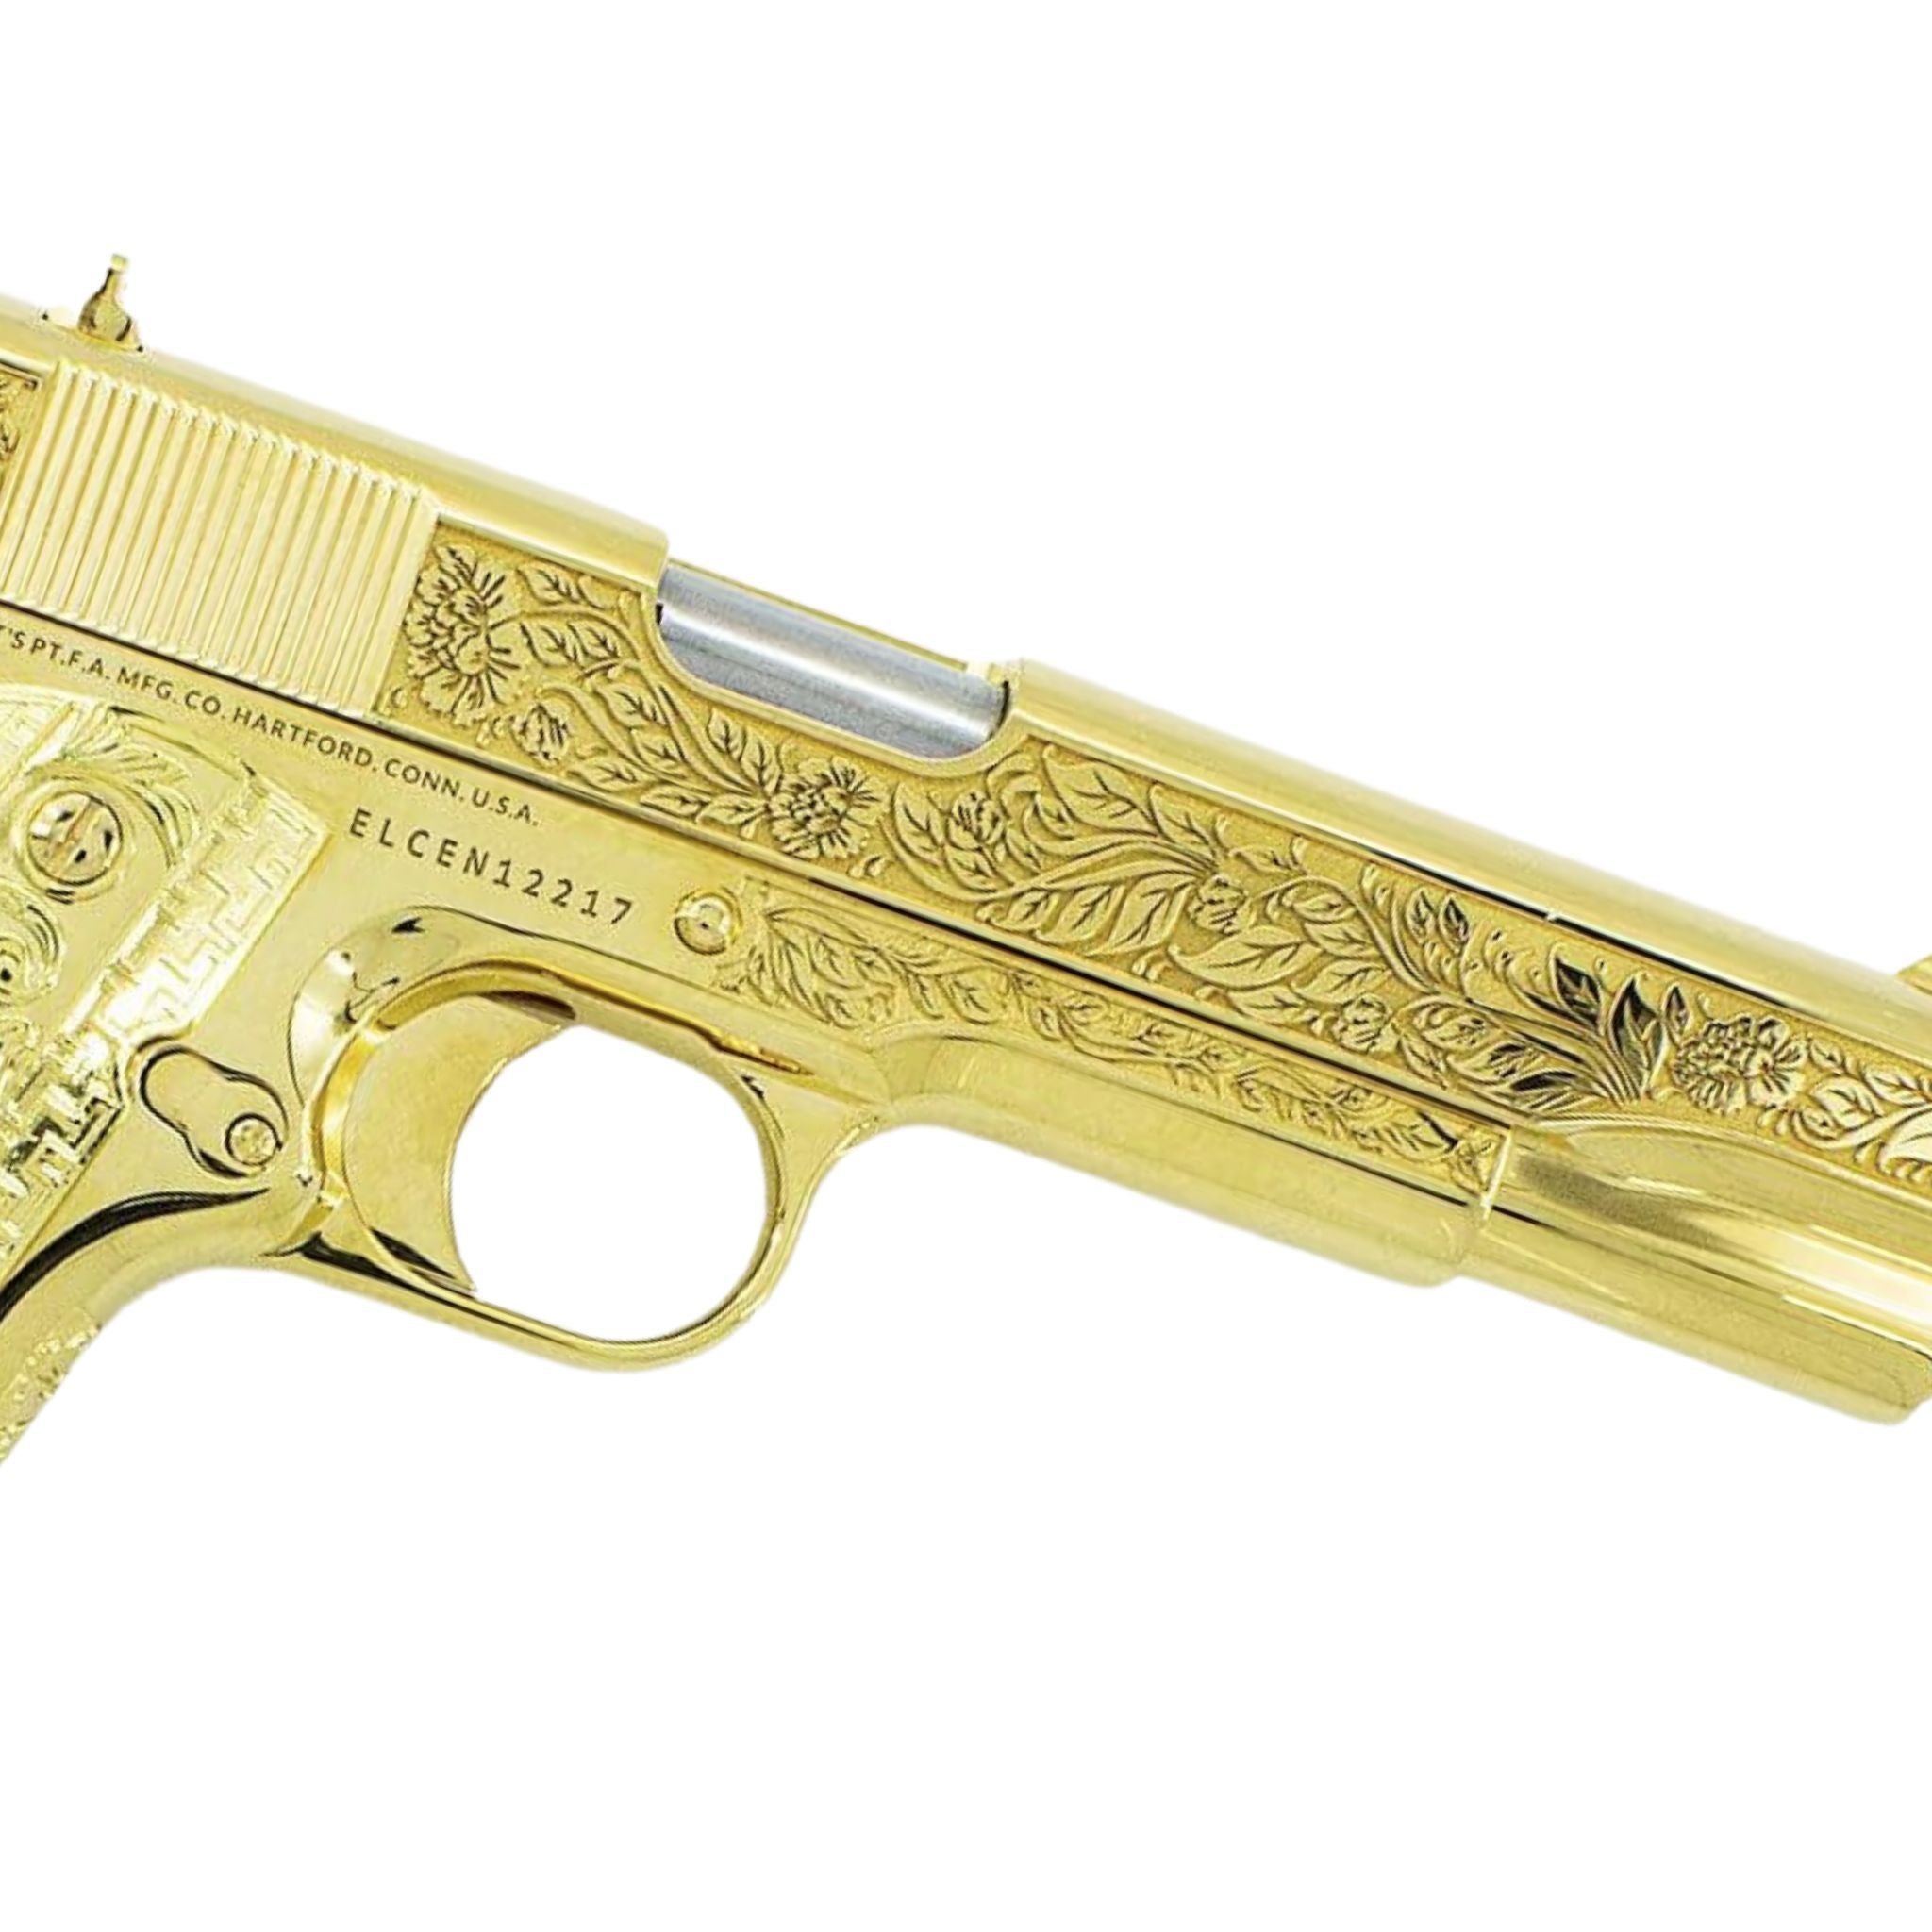 Colt 1911 Government, 38 Super, Italian Renaissance Design, 24K All Gold Plated, 4389348311142, 24K Gold Firearms. CUSTOM GUNS